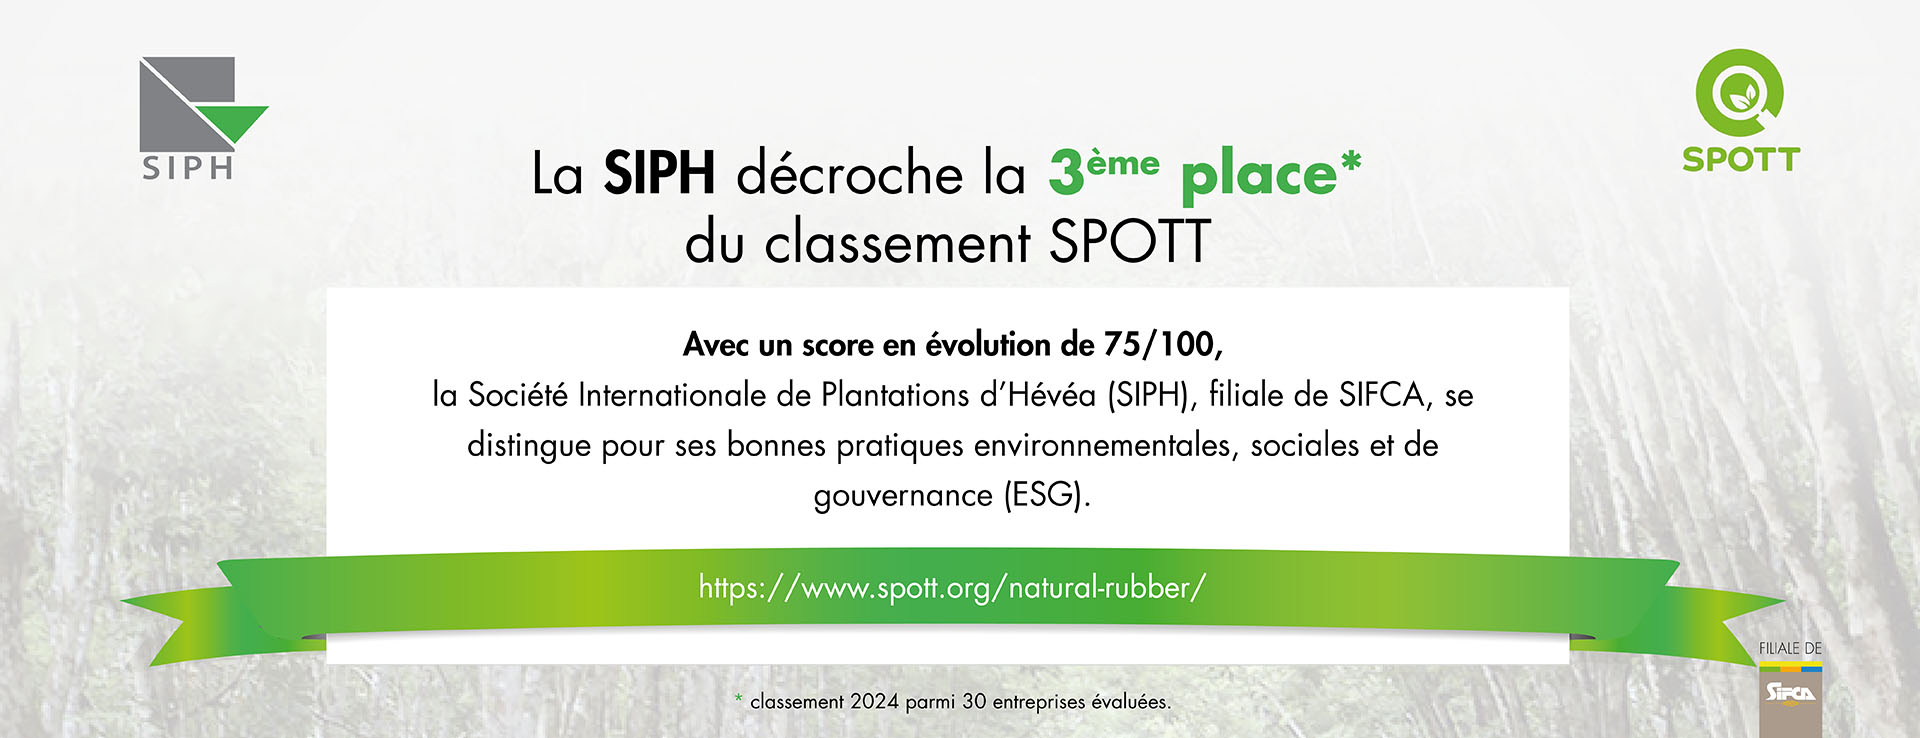 Spott 2024 SIPH Site web SIPH FR